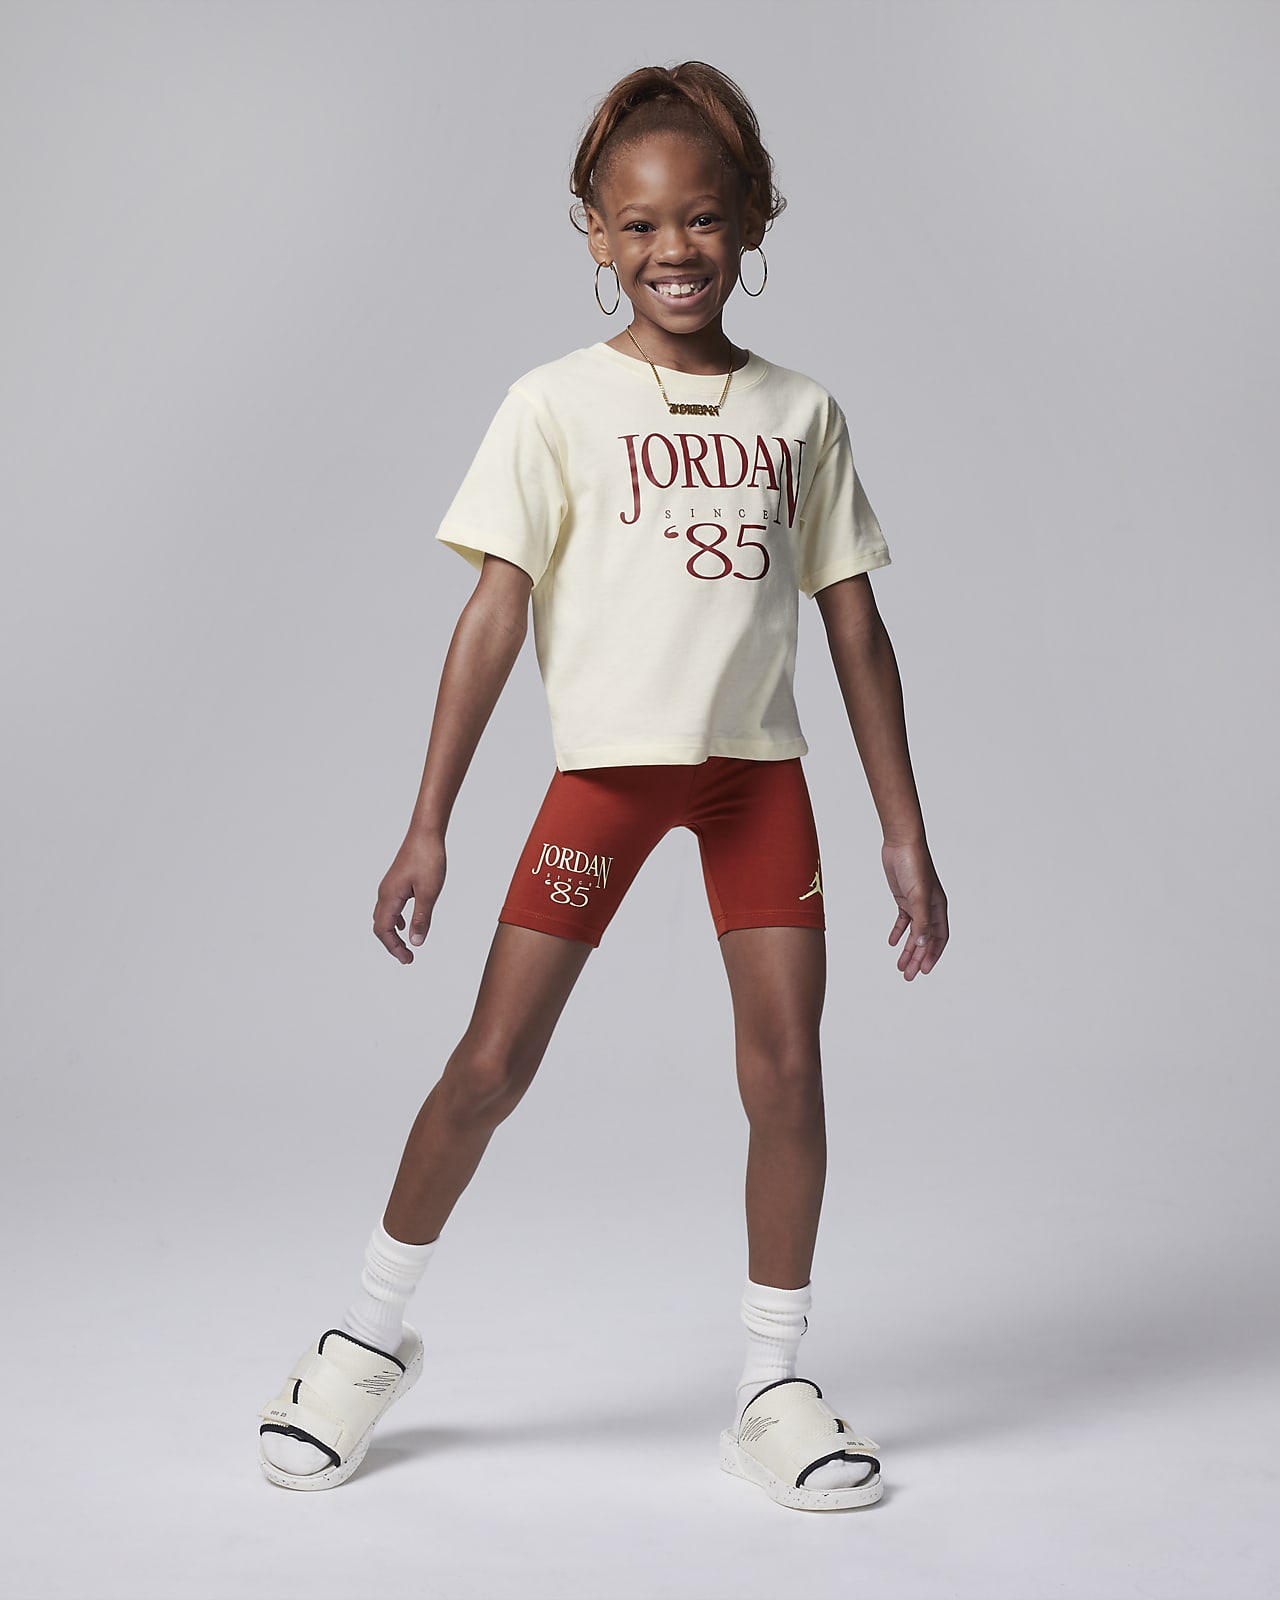 Jordan Brooklyn Mini Me Younger Kids' Bike Shorts Set